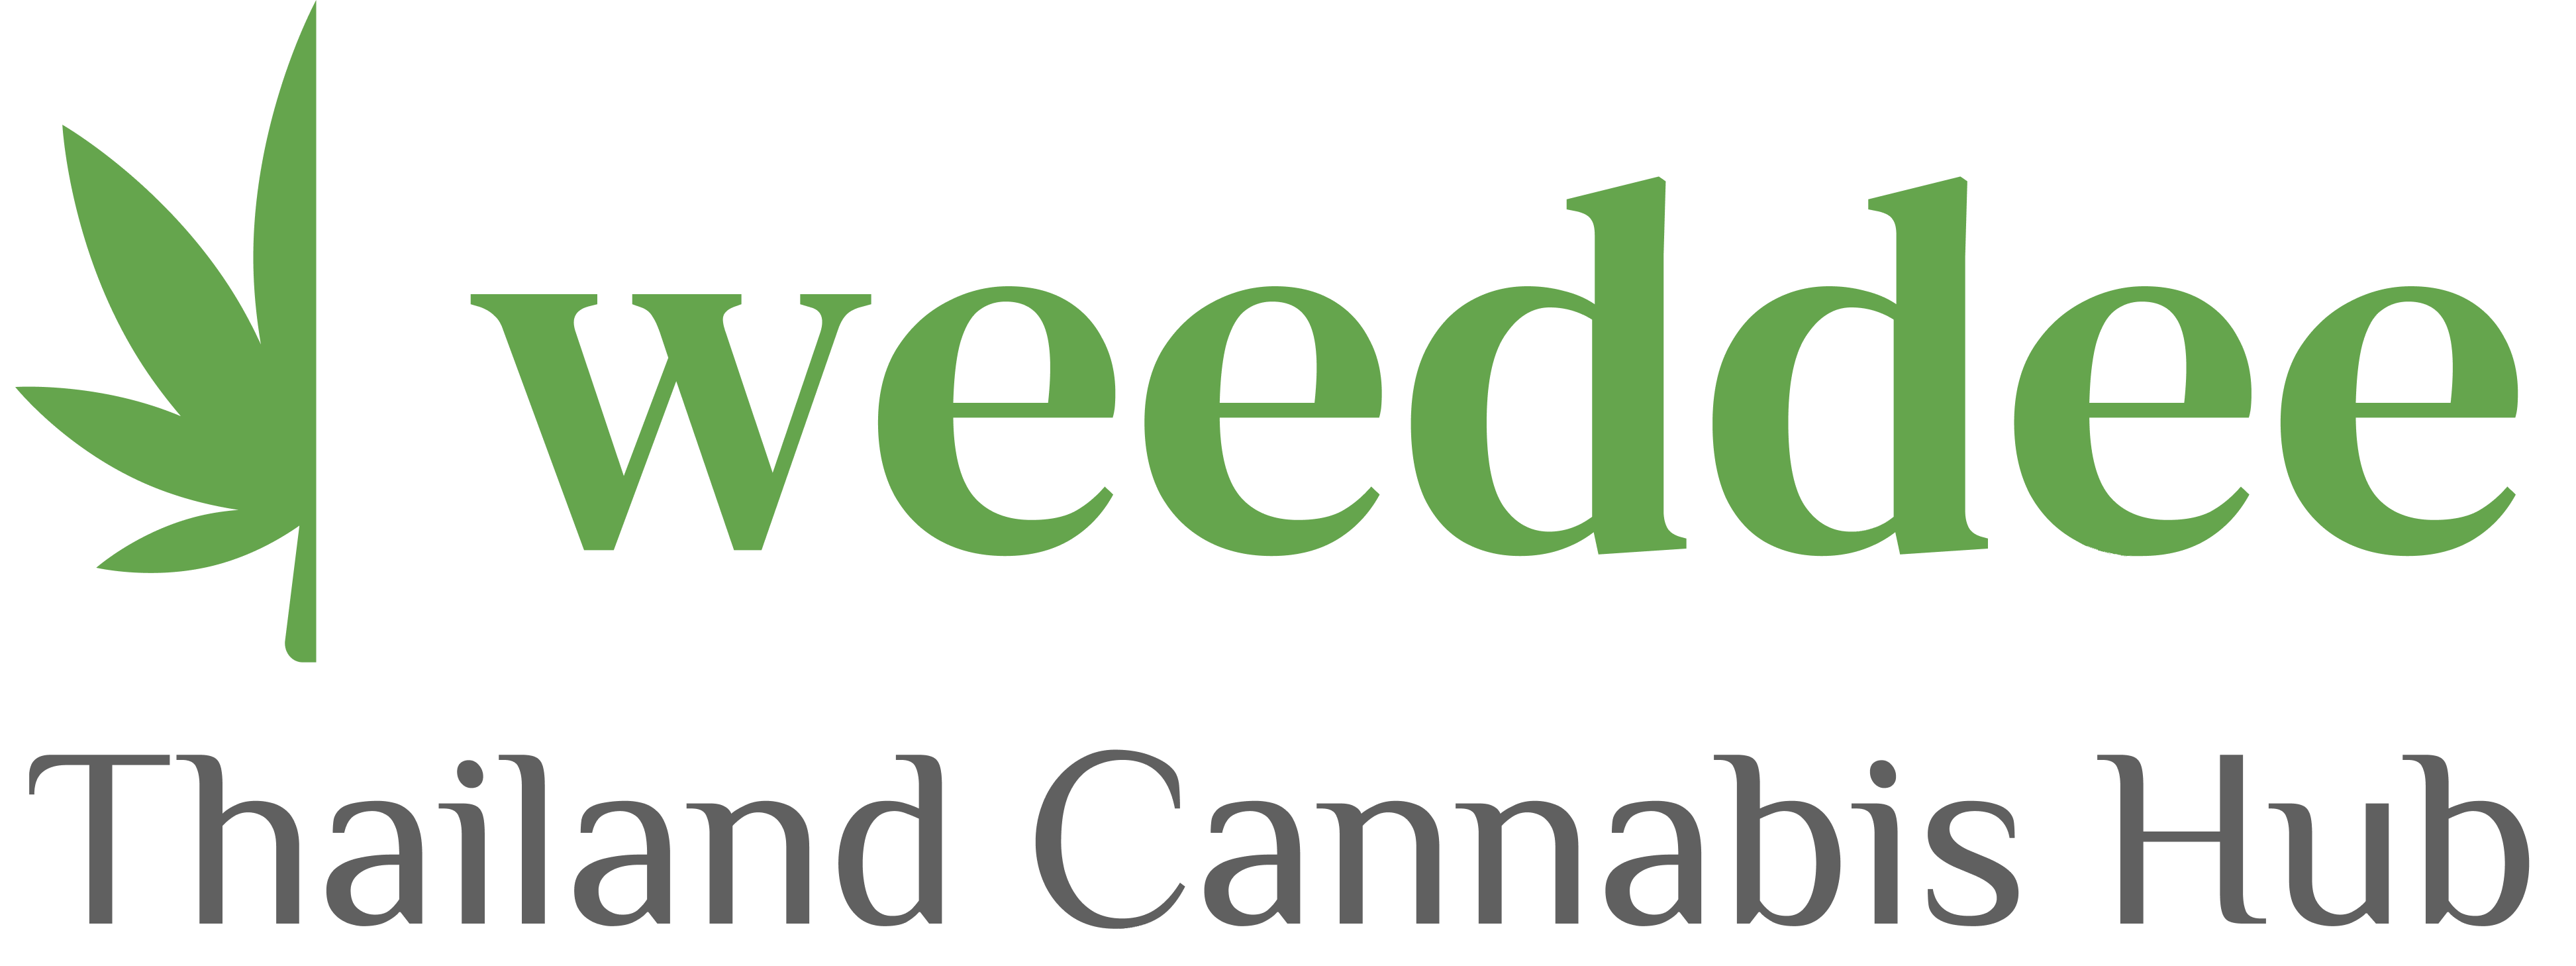 Weeddee – Thailand Cannabis Shops Directory